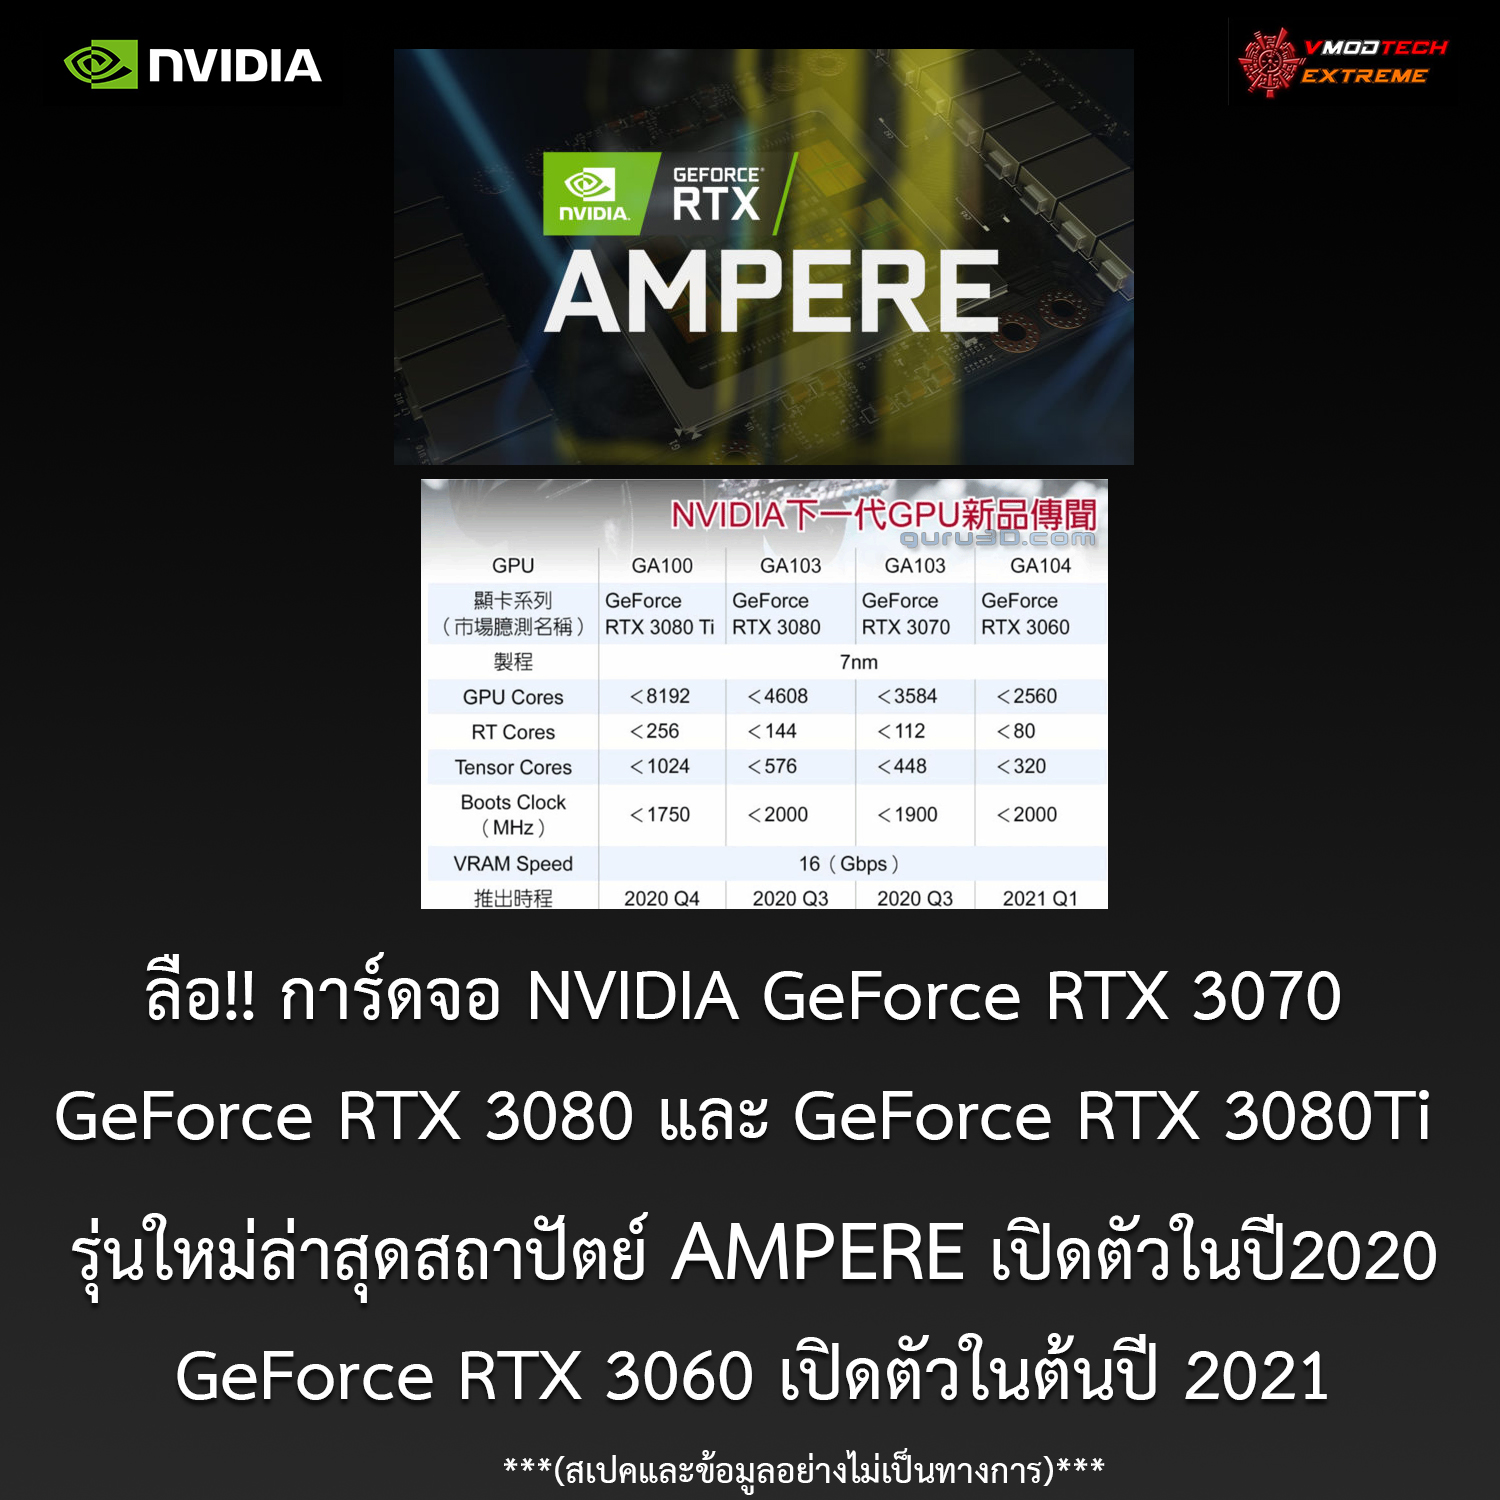 nvidia ampere 2020 2021 ลือ!! การ์ดจอ NVIDIA GeForce RTX 3070 , GeForce RTX 3080 และ GeForce RTX 3080Ti รุ่นใหม่ล่าสุดจะเปิดตัวในปี2020 